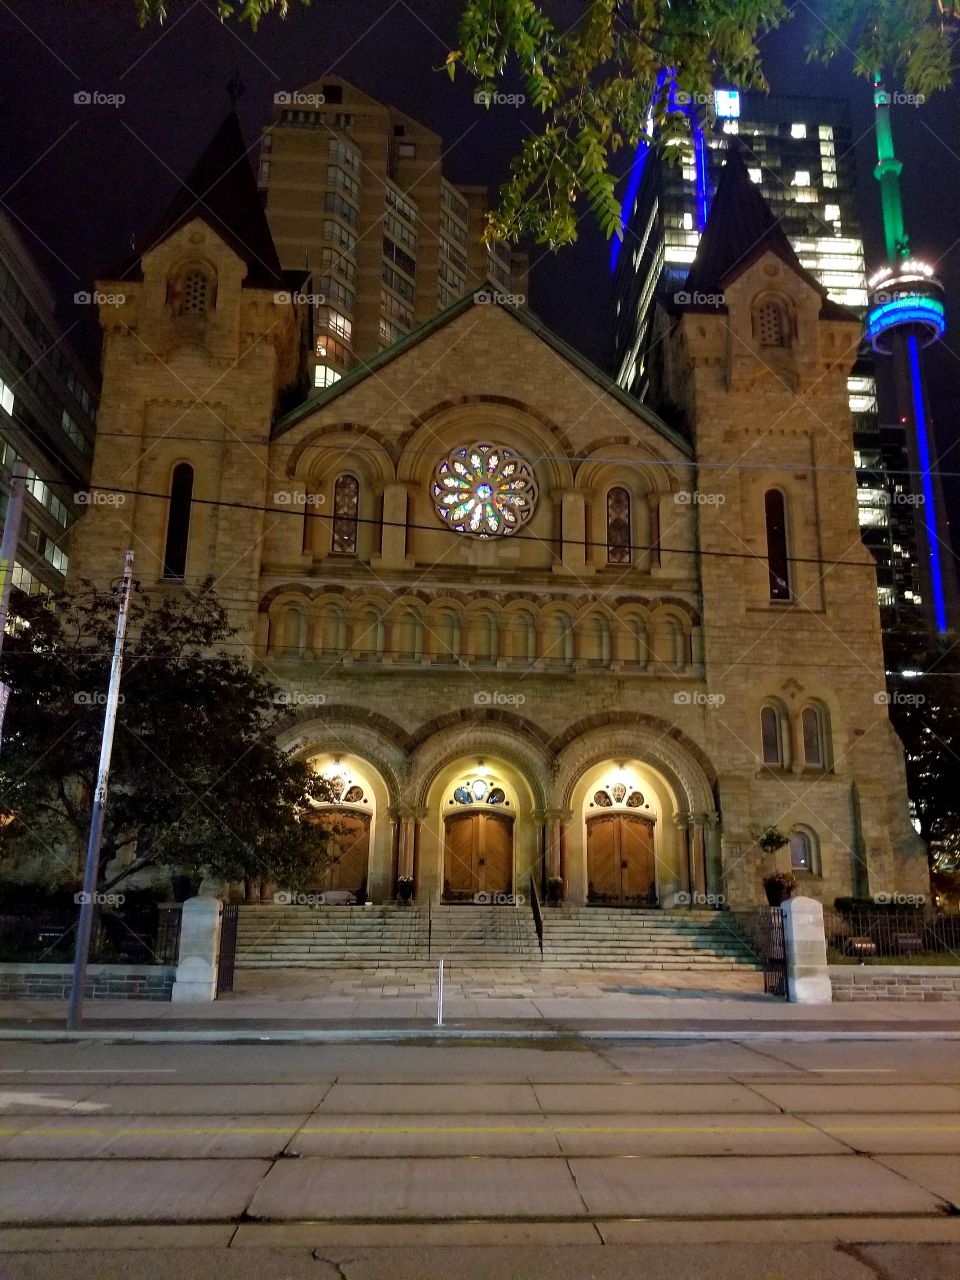 Toronto's Churches